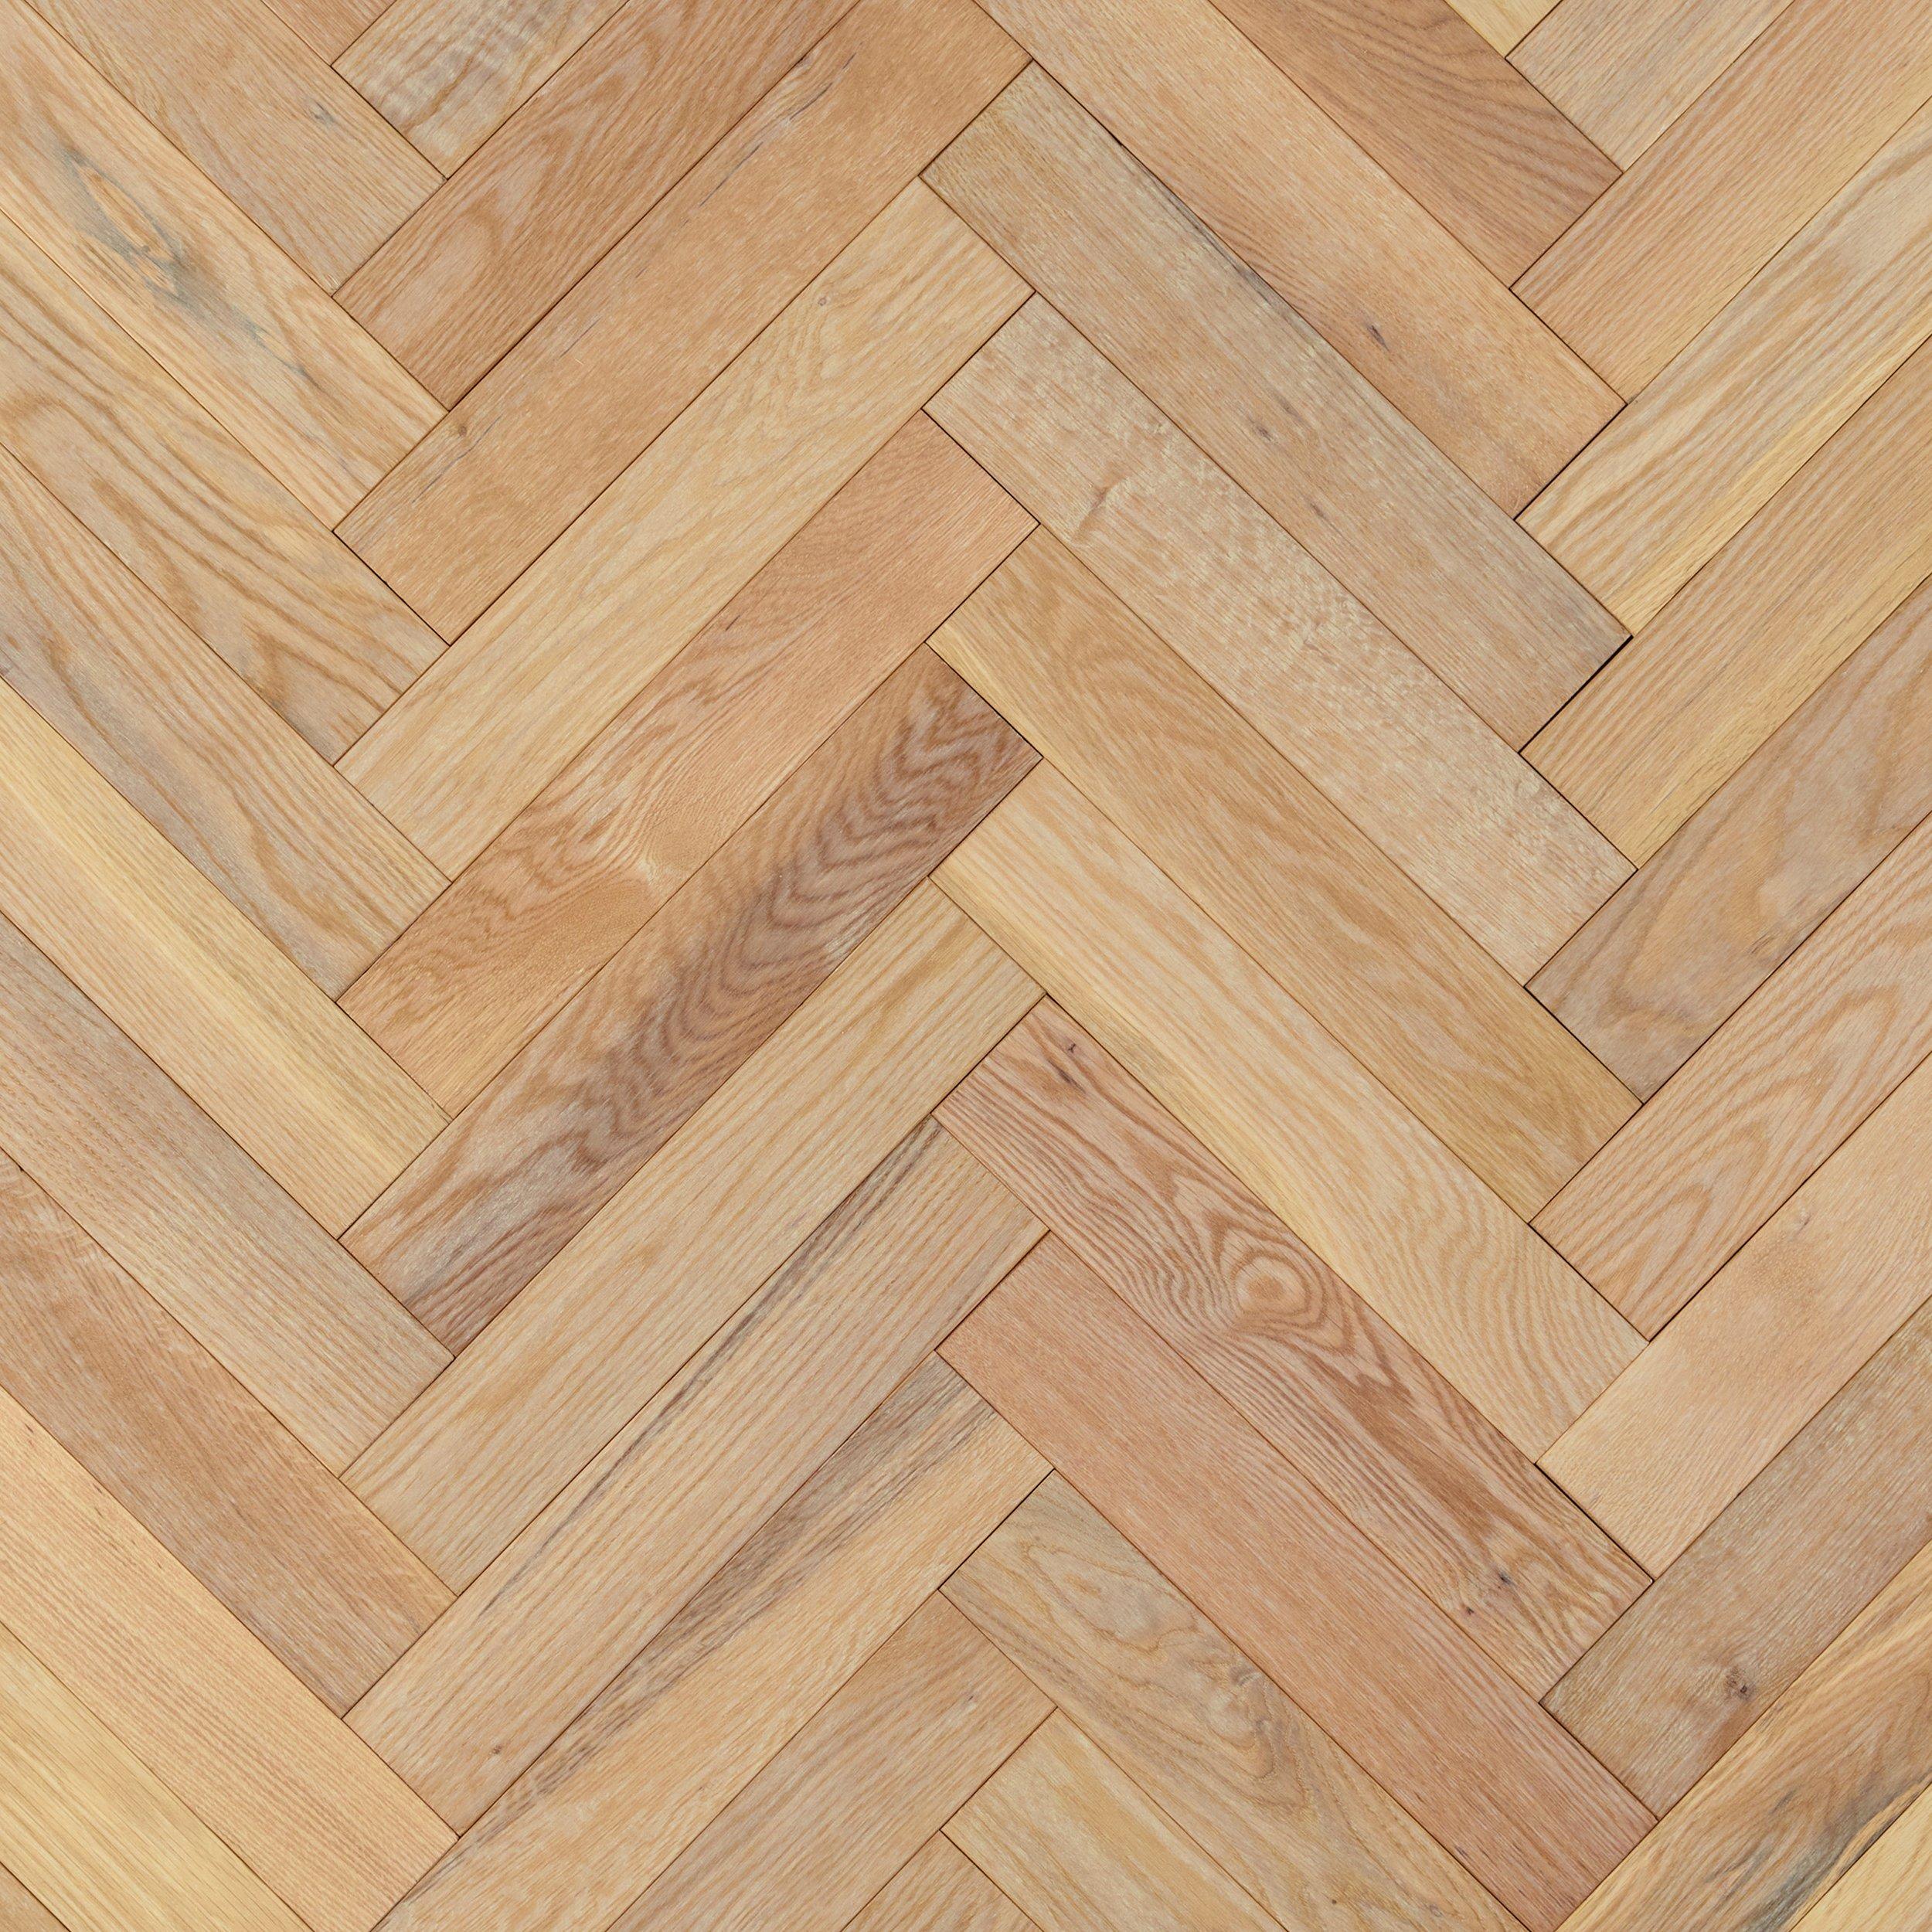 our herringbone floors part 1 — The Hardwood Co.